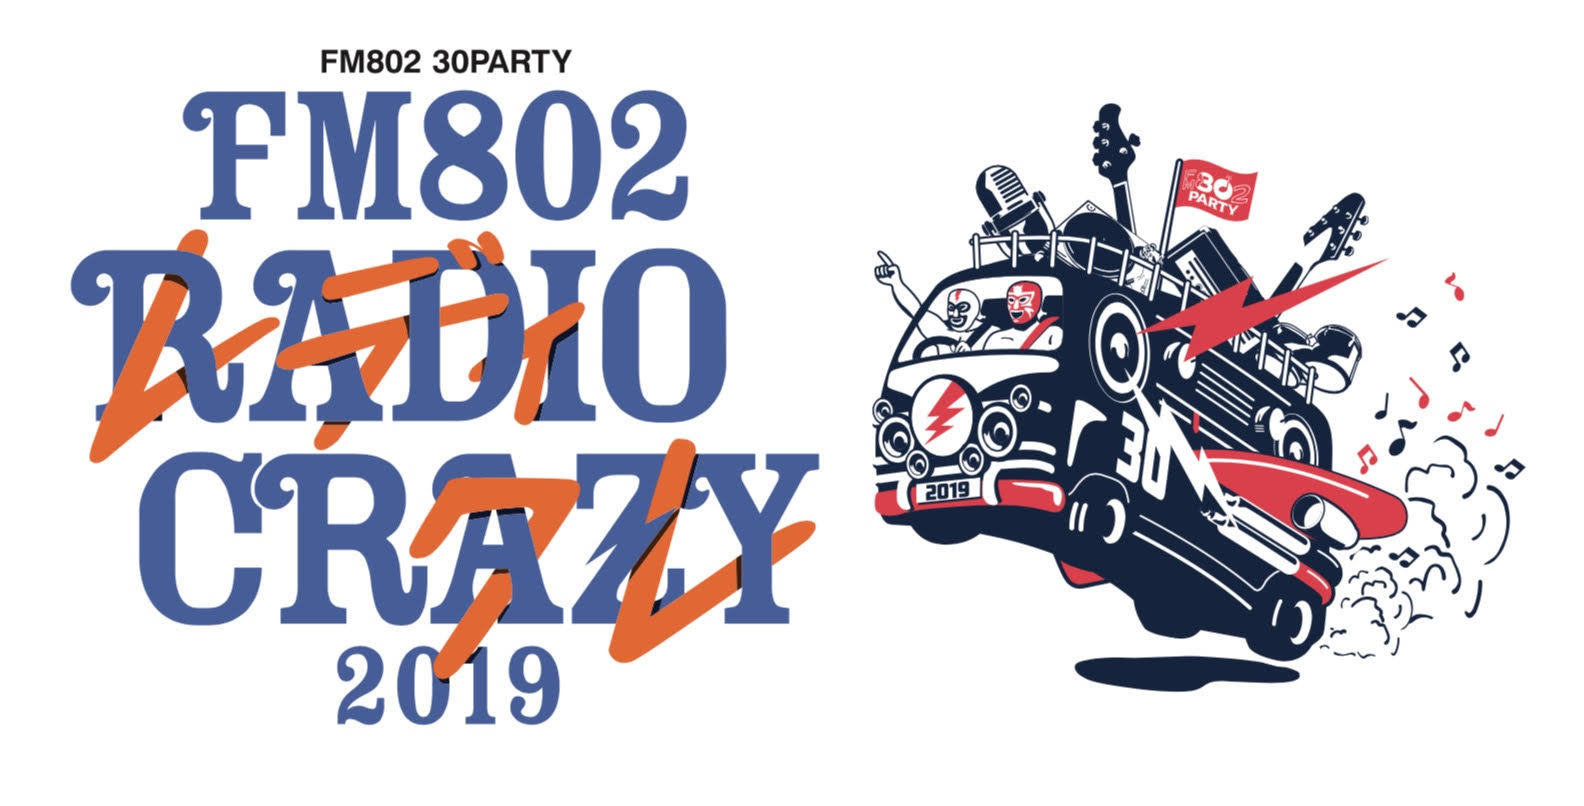 「FM802 30PARTY FM802 ROCK FESTIVAL RADIO CRAZY 2019」への出演が決定！